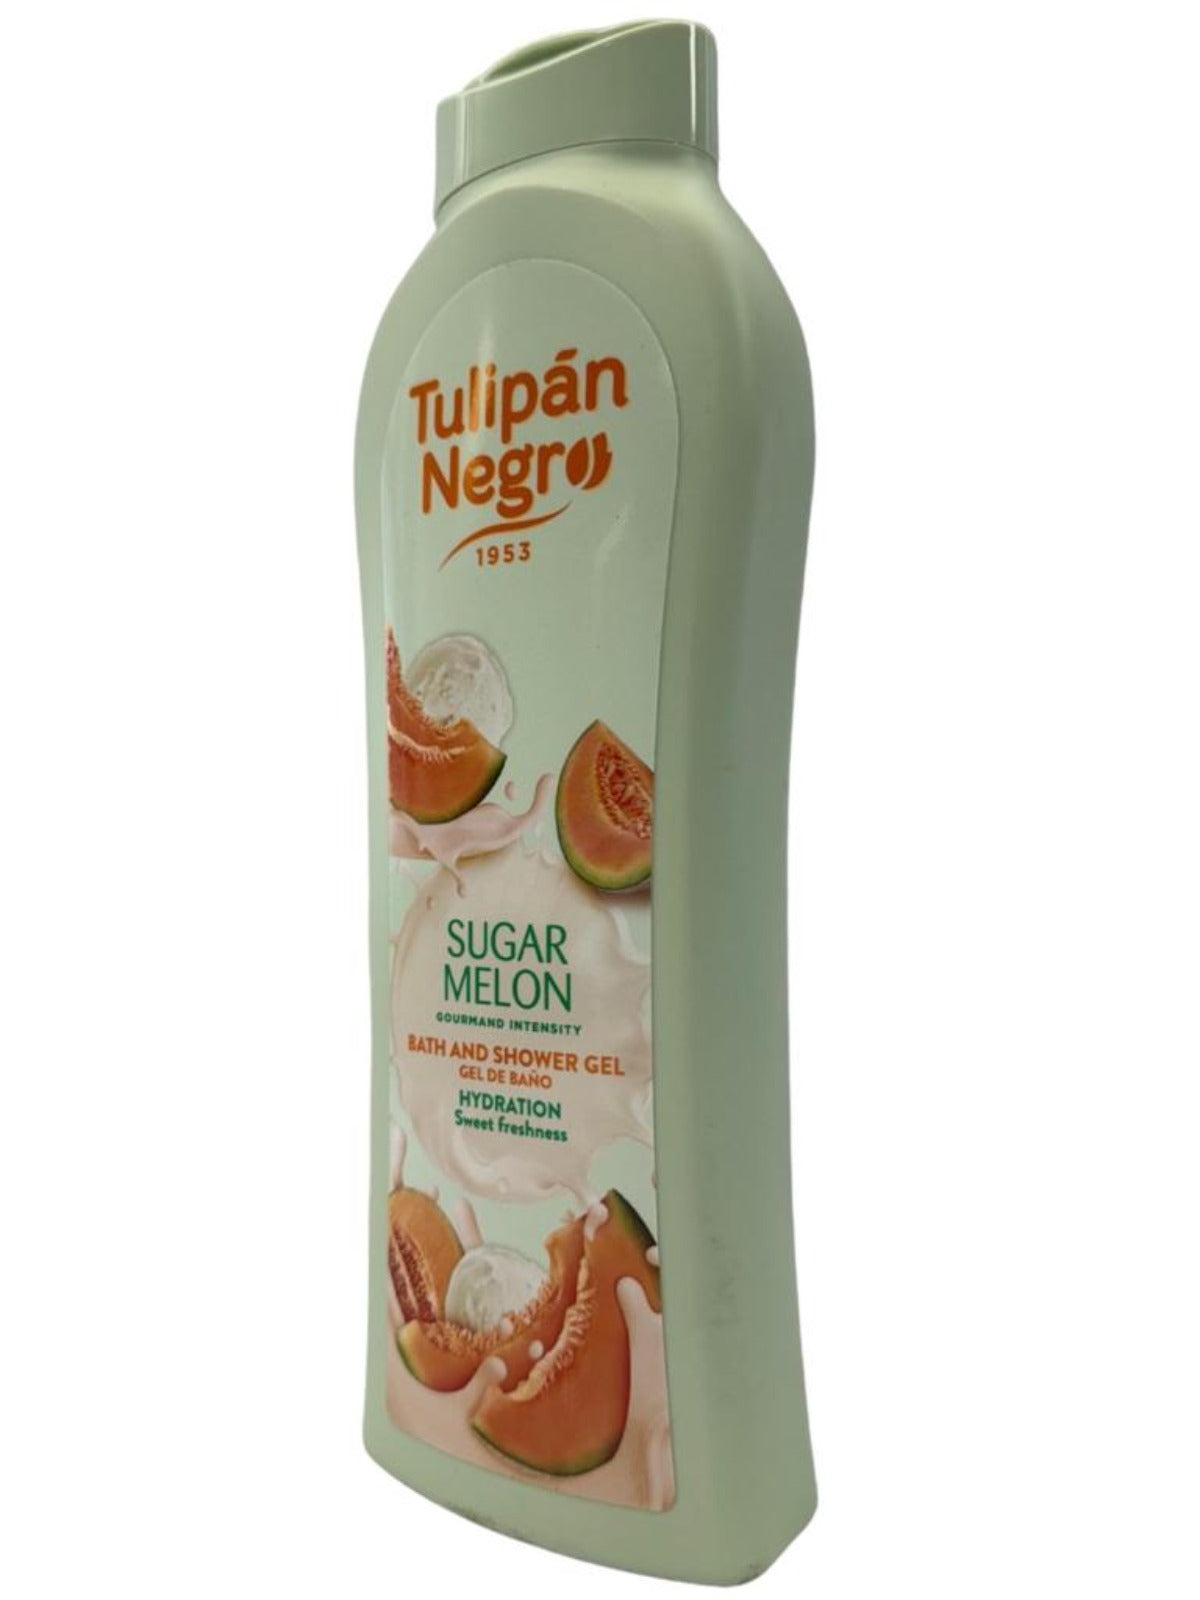 Tulipan Negro Sugar Melon Bath And Shower Gel 650ml – Rodriguez Bros